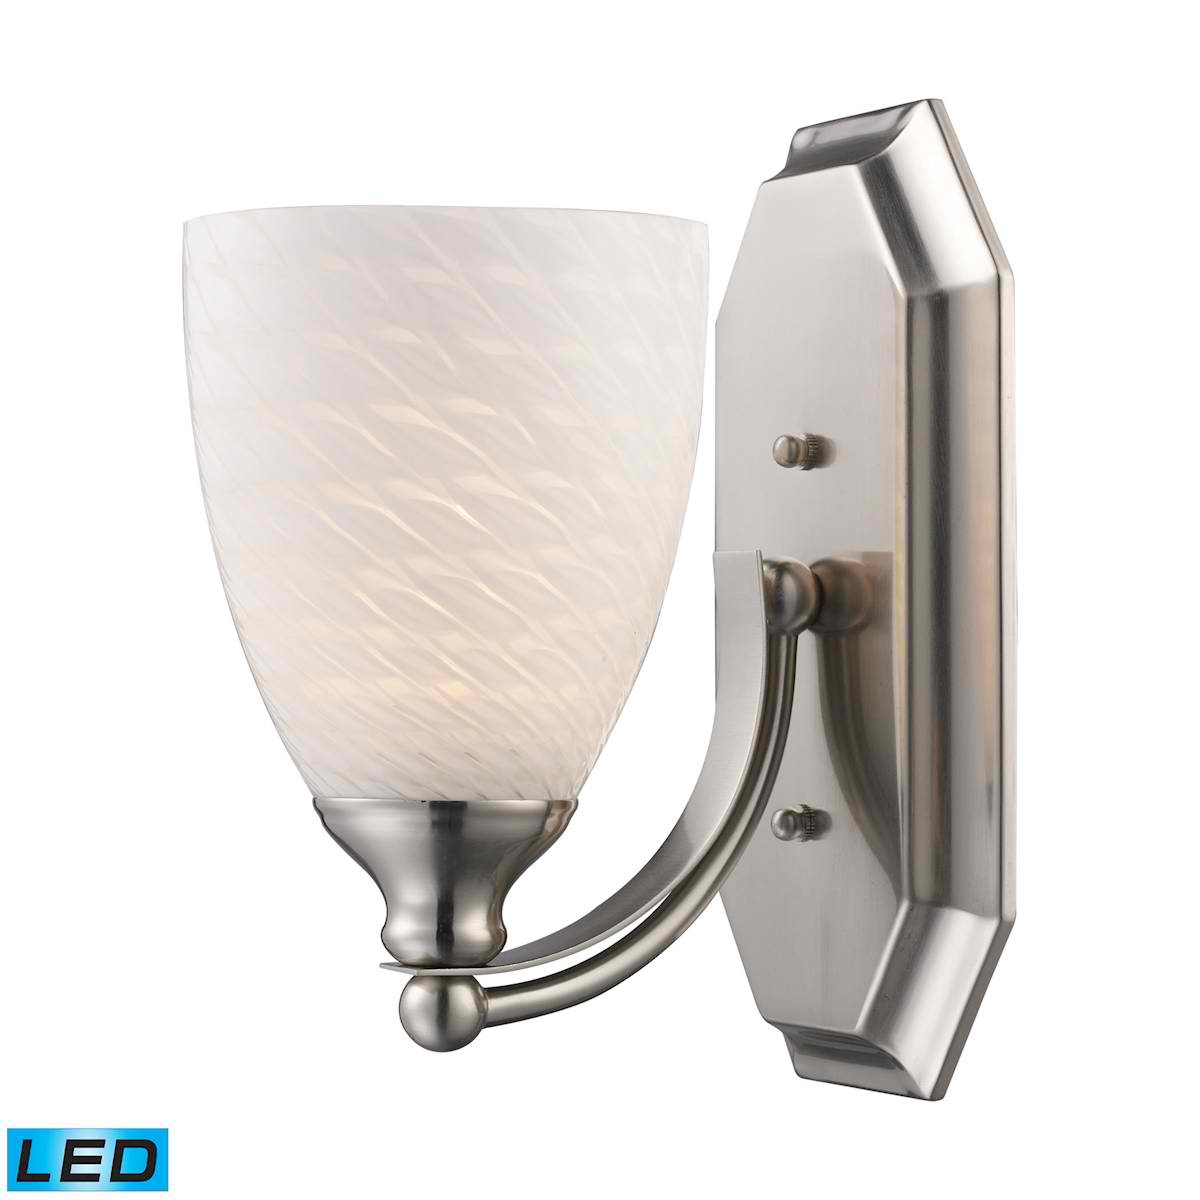 1 Light Vanity in Satin Nickel and White Swirl Glass - LED Offering Up To 800 Lumens (60 Watt Equivalent)